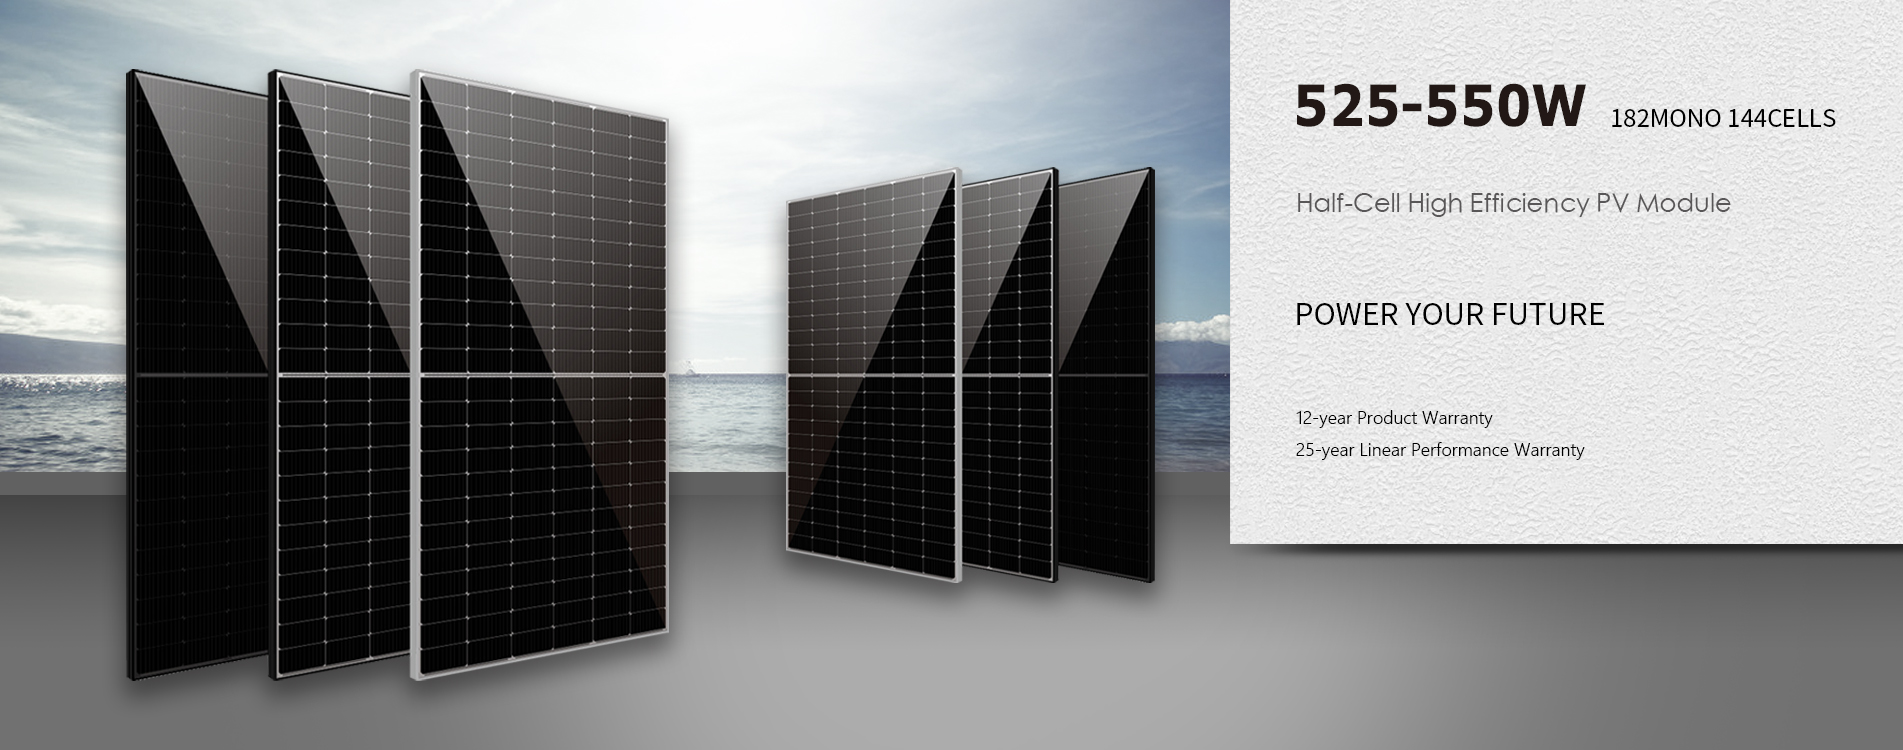 525W-550W Monocrystalline Solar Panel 144Cells